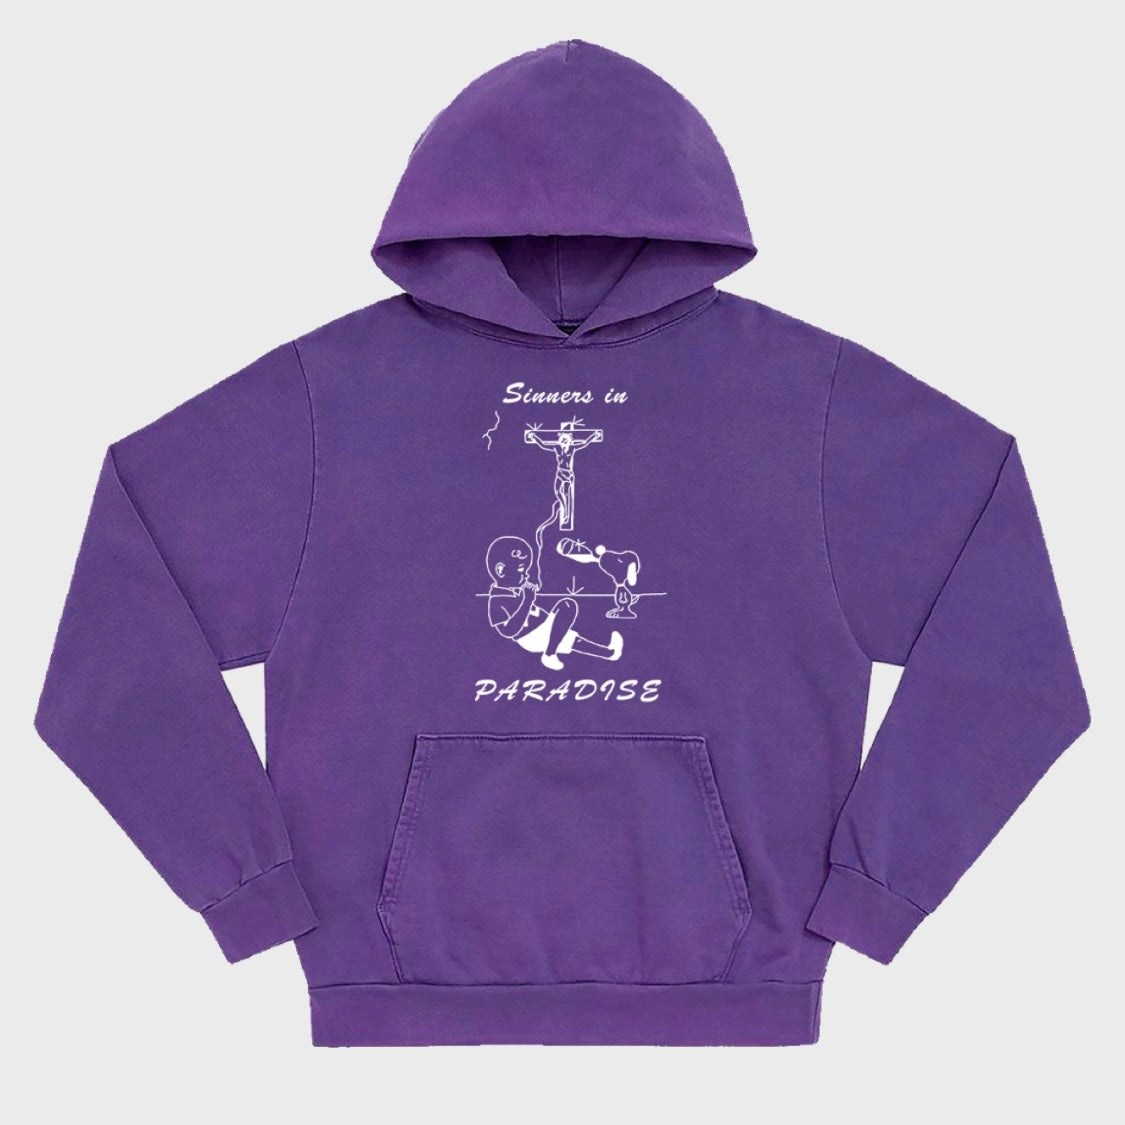 Paradise NYC - Sinners Pullover Hooded Sweatshirt - Purple